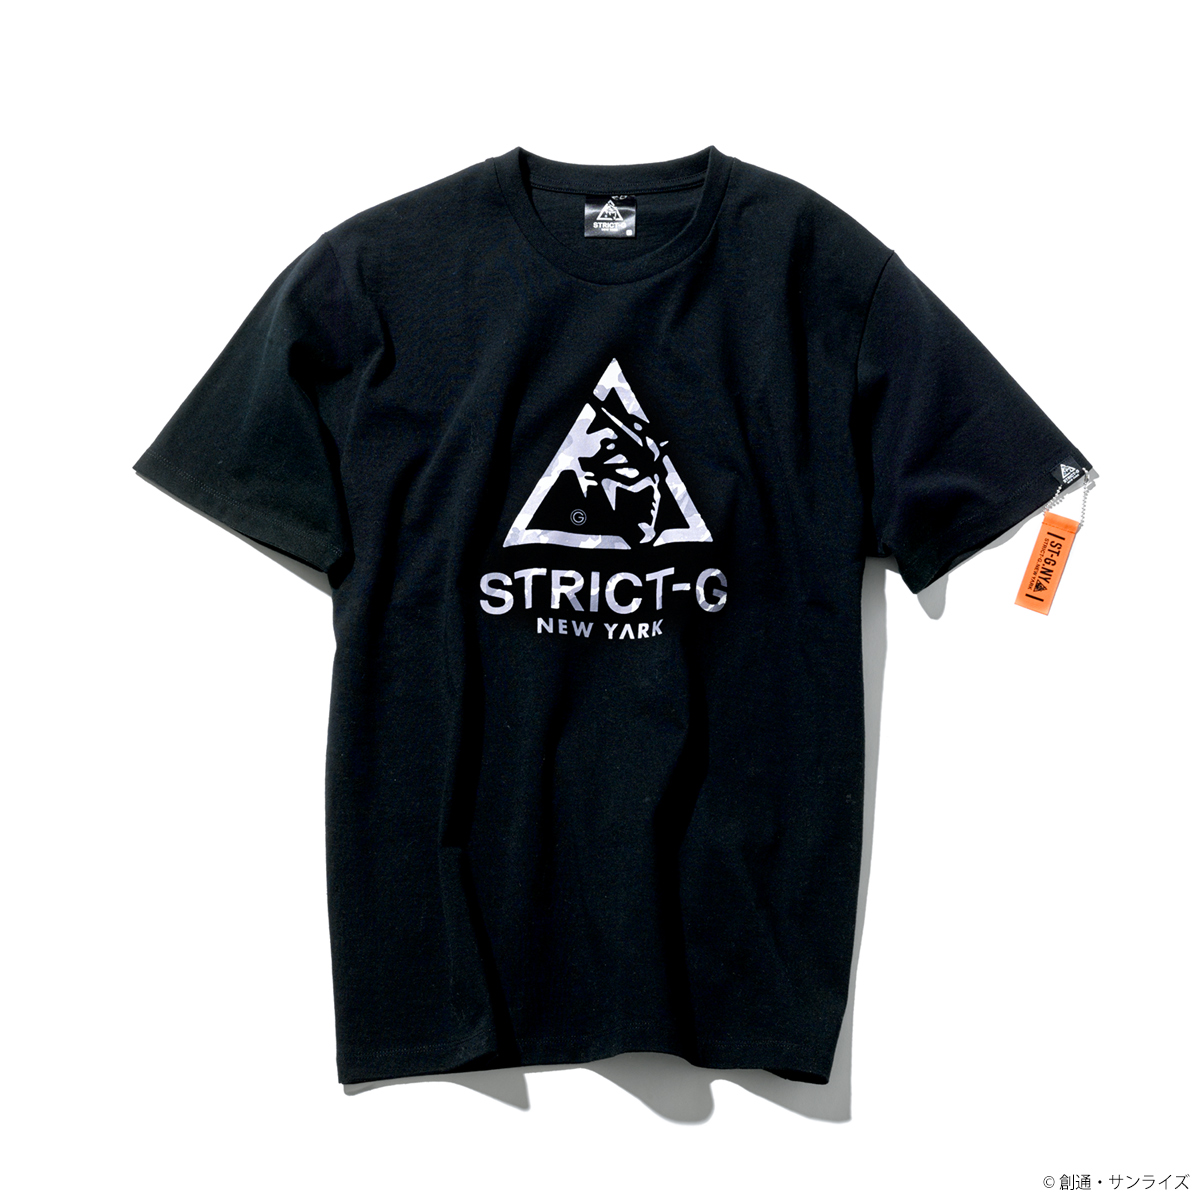 Triangle Logo T-shirt—Mobile Suit Gundam/STRICT-G NEW YARK Collaboration